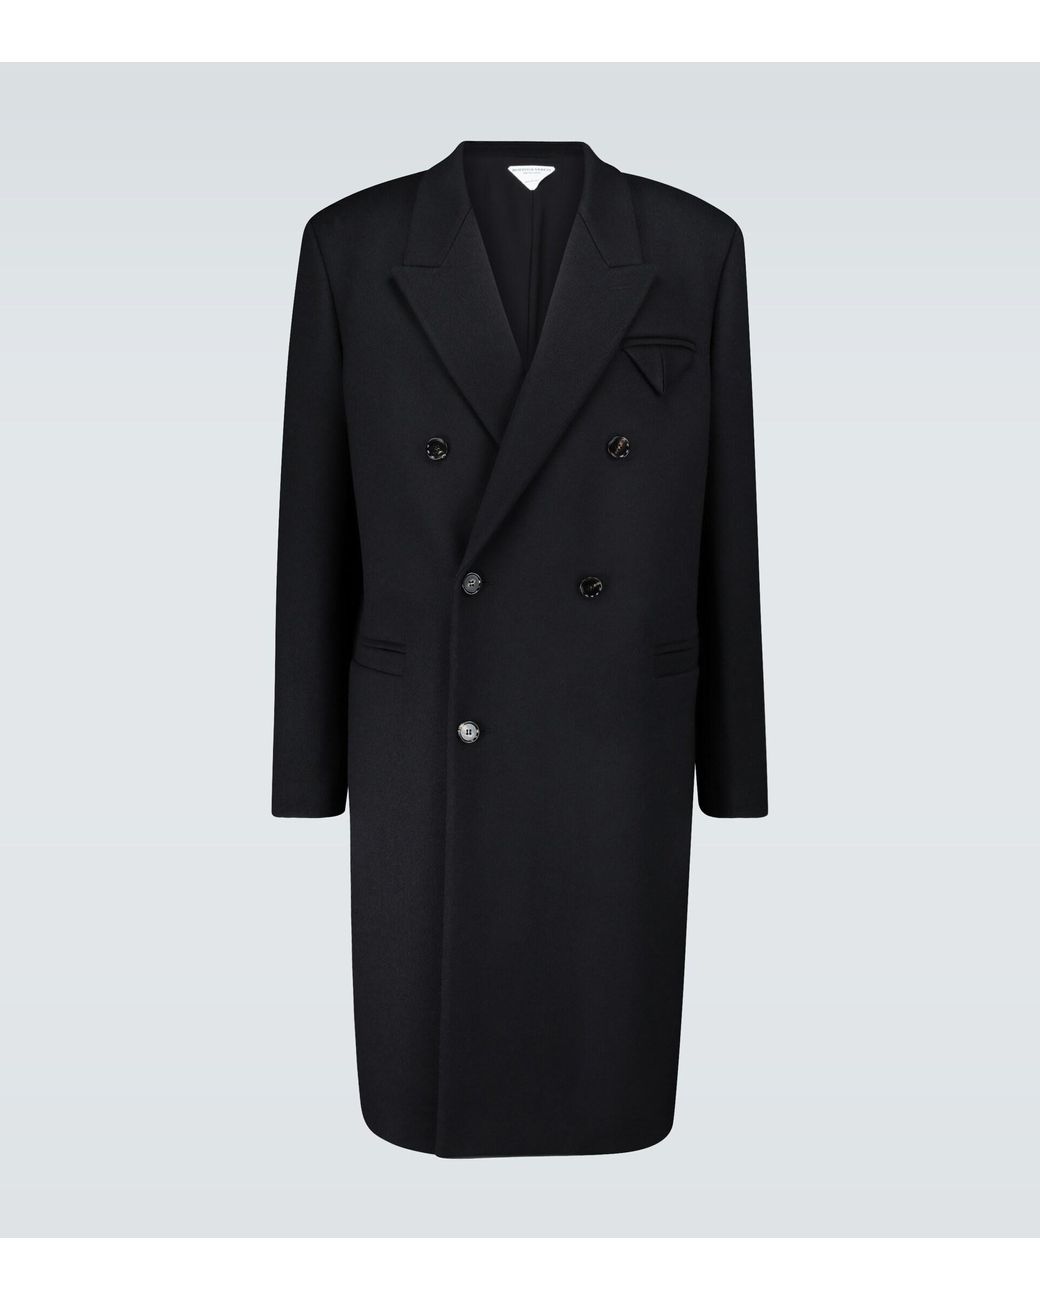 Bottega Veneta Long Double-breasted Wool Coat in Black for Men | Lyst